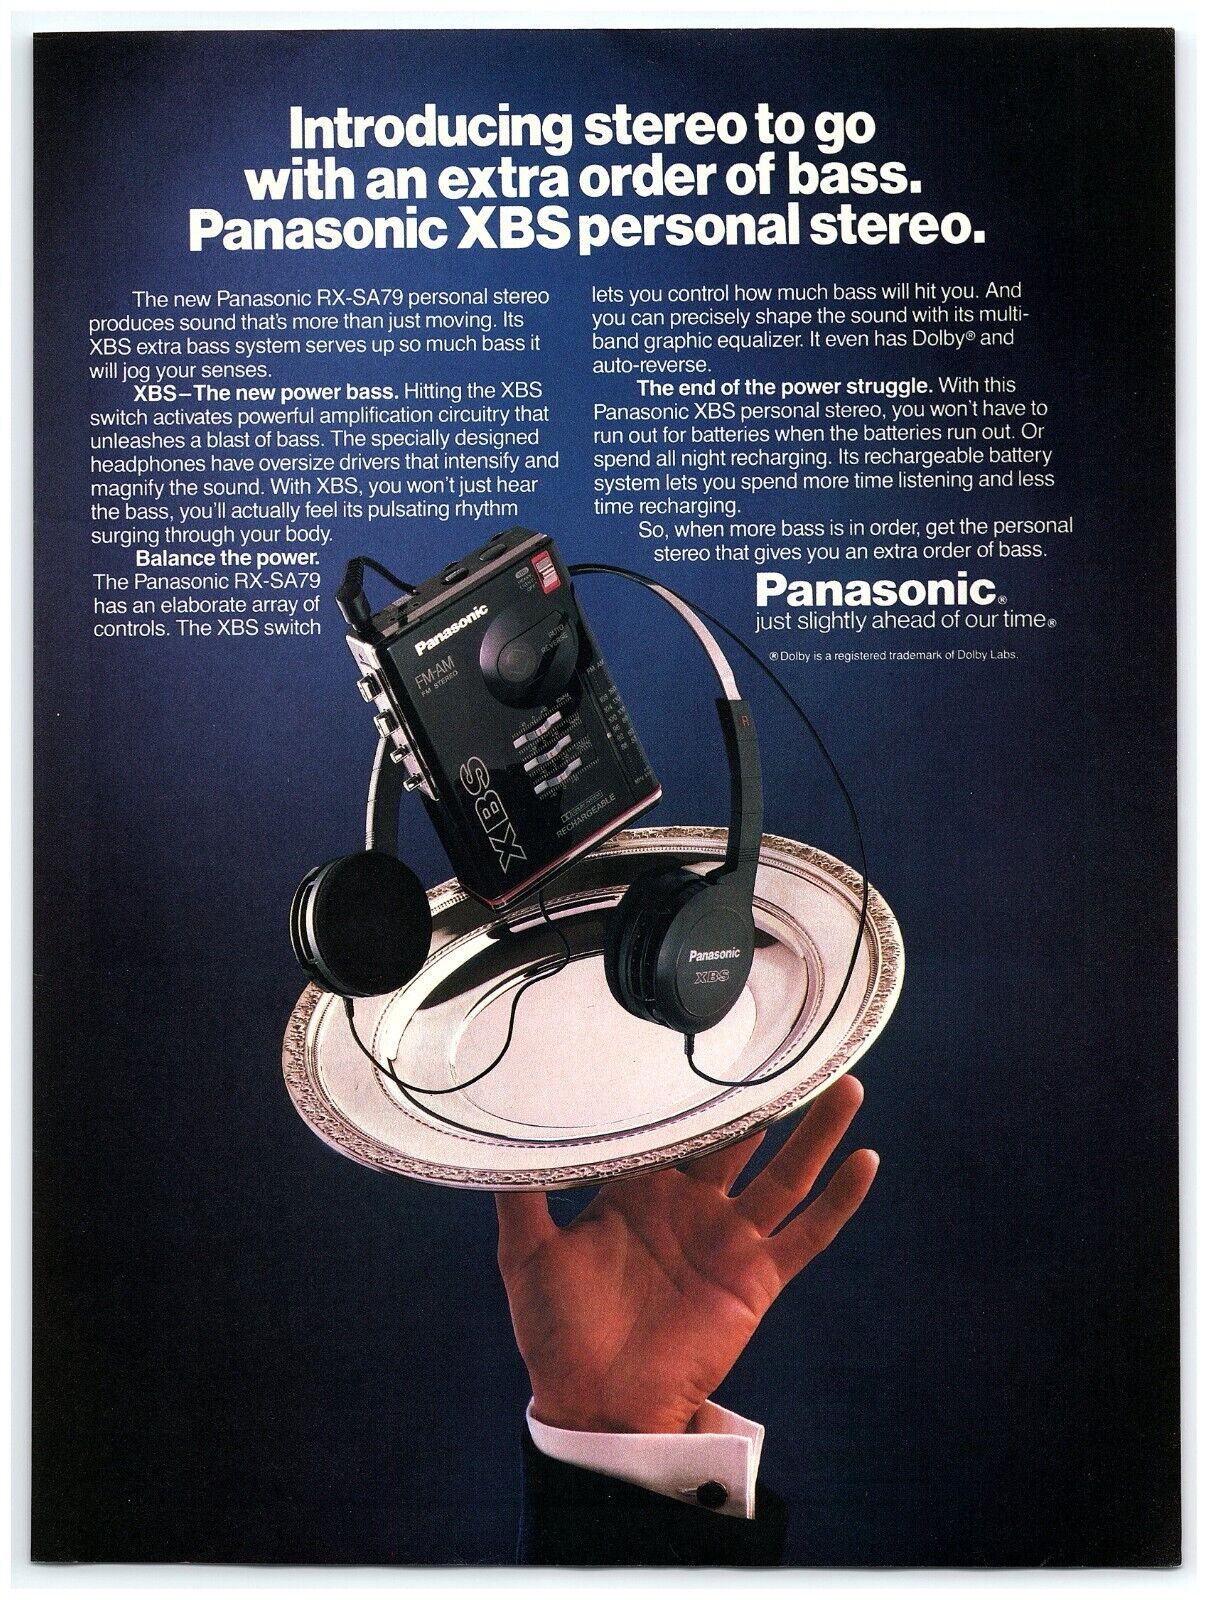 1987 Panasonic RX-SA79 Personal Stereo Print Ad, XBS Extra Power Bass Headphones